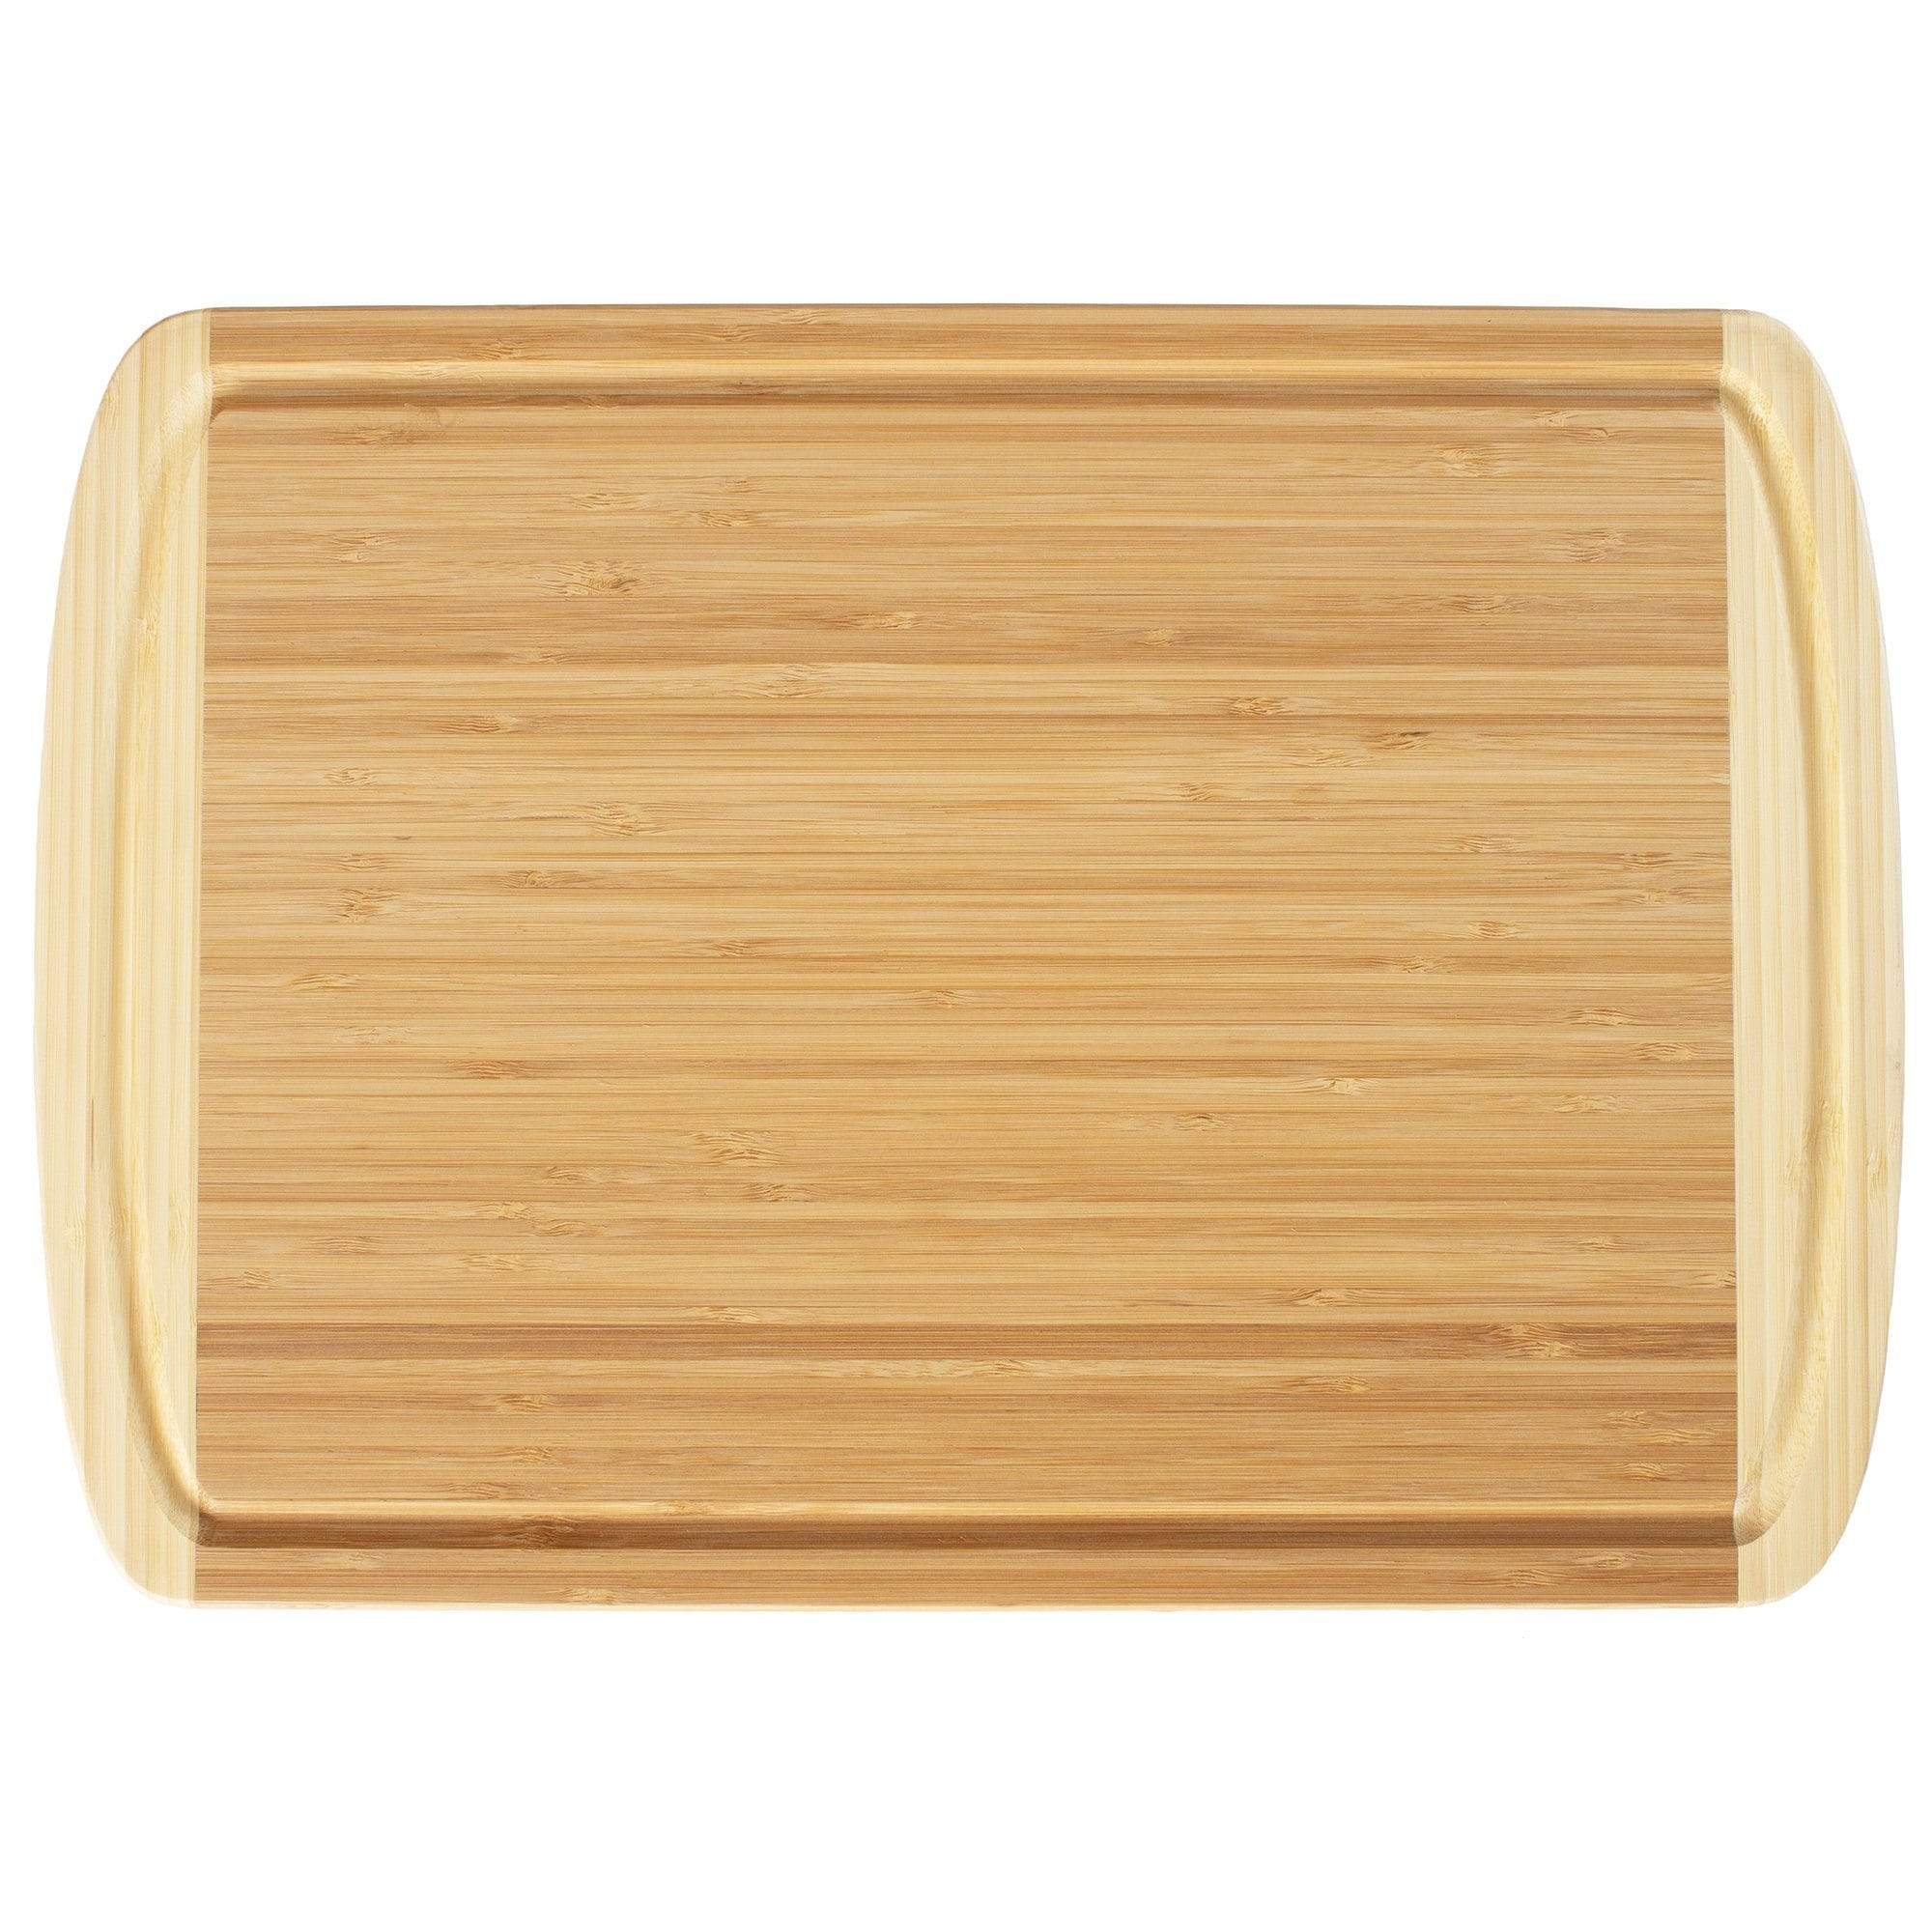 Totally Bamboo Kona Groove Cutting Board